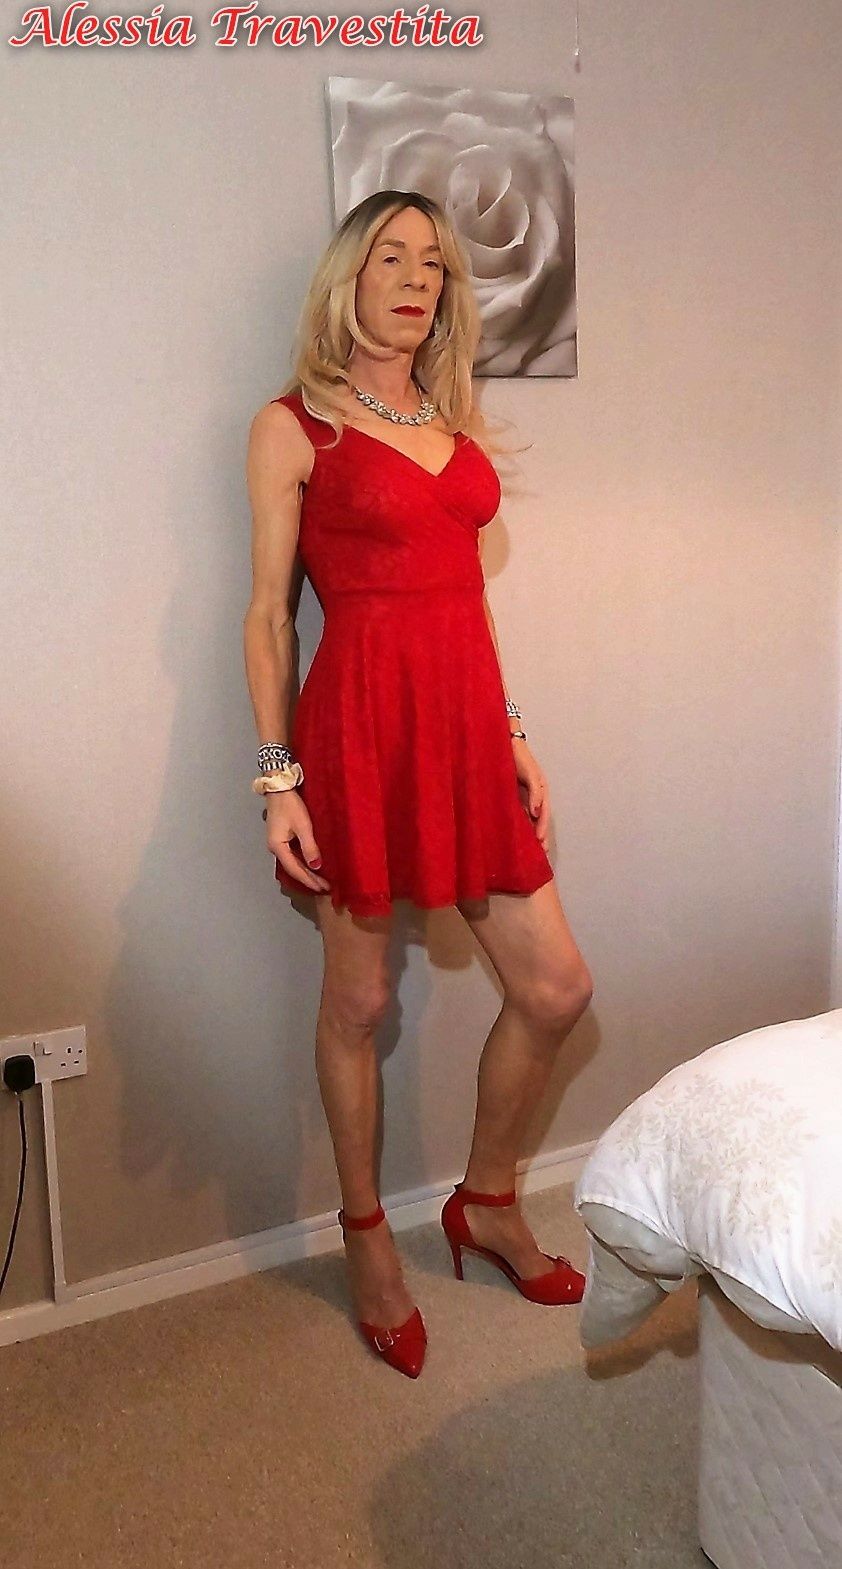 65 Alessia Travestita in Flirty Red Dress #18